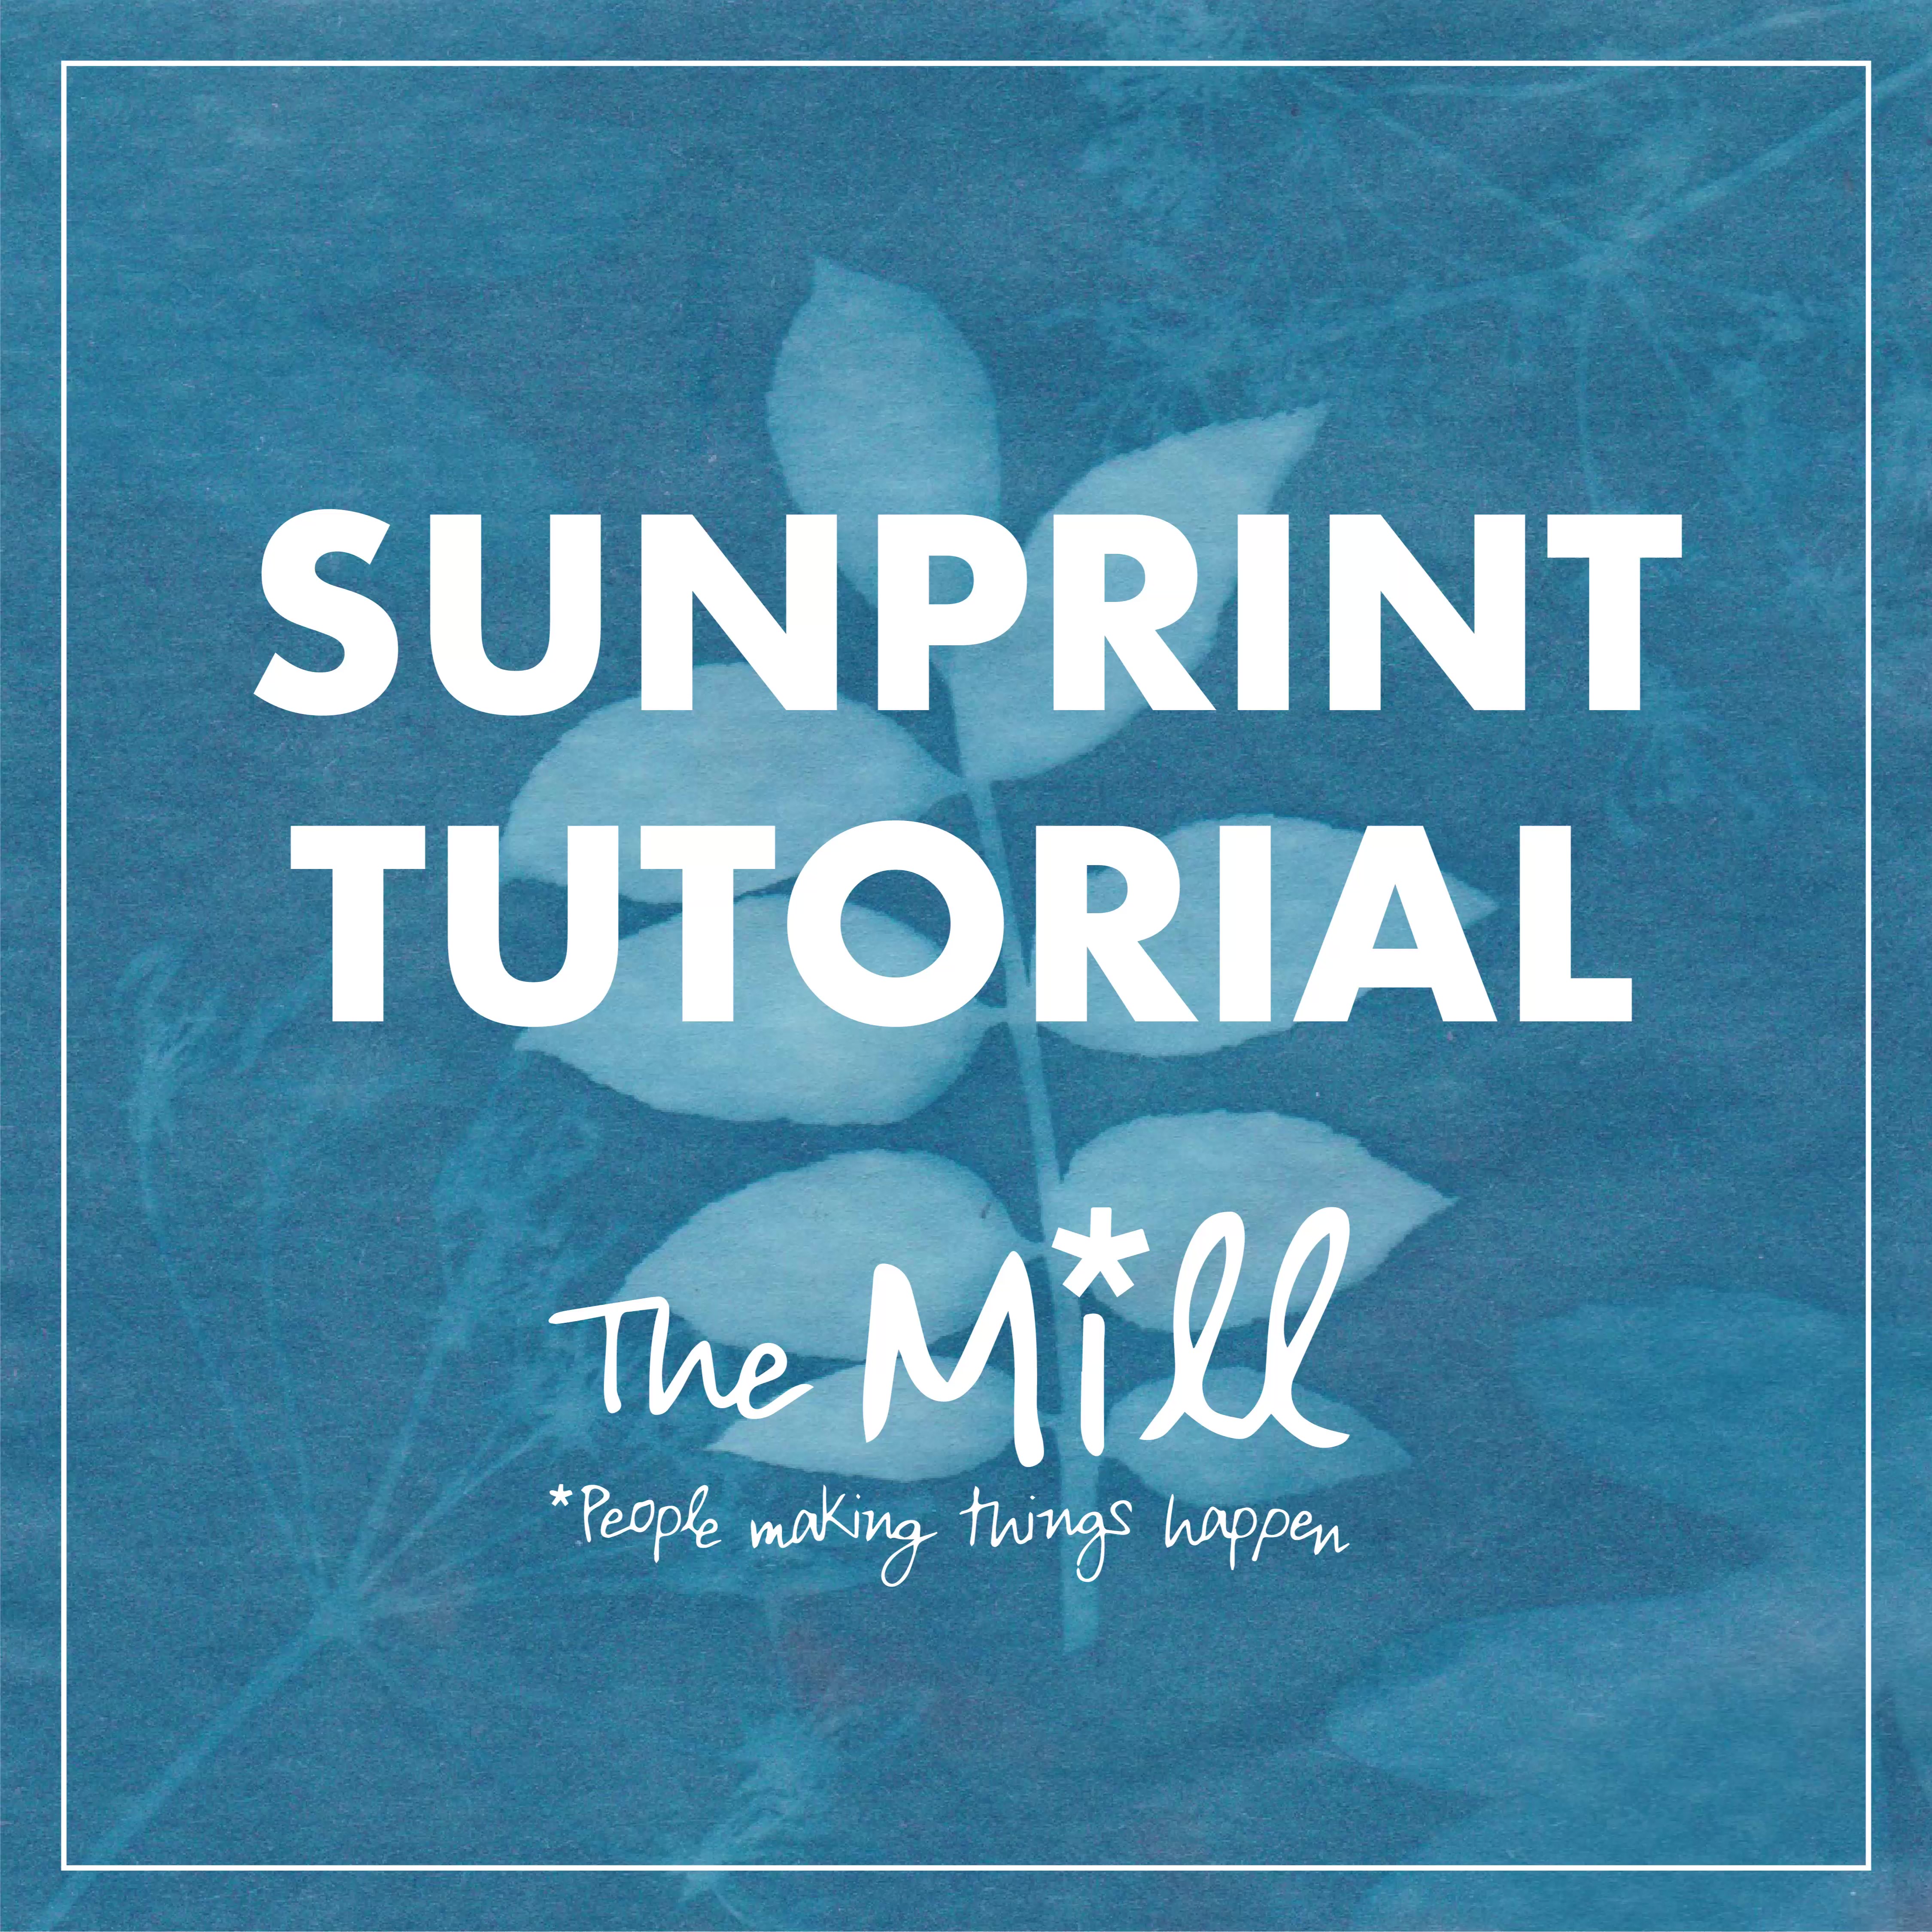 Sunprint Tutorial title card